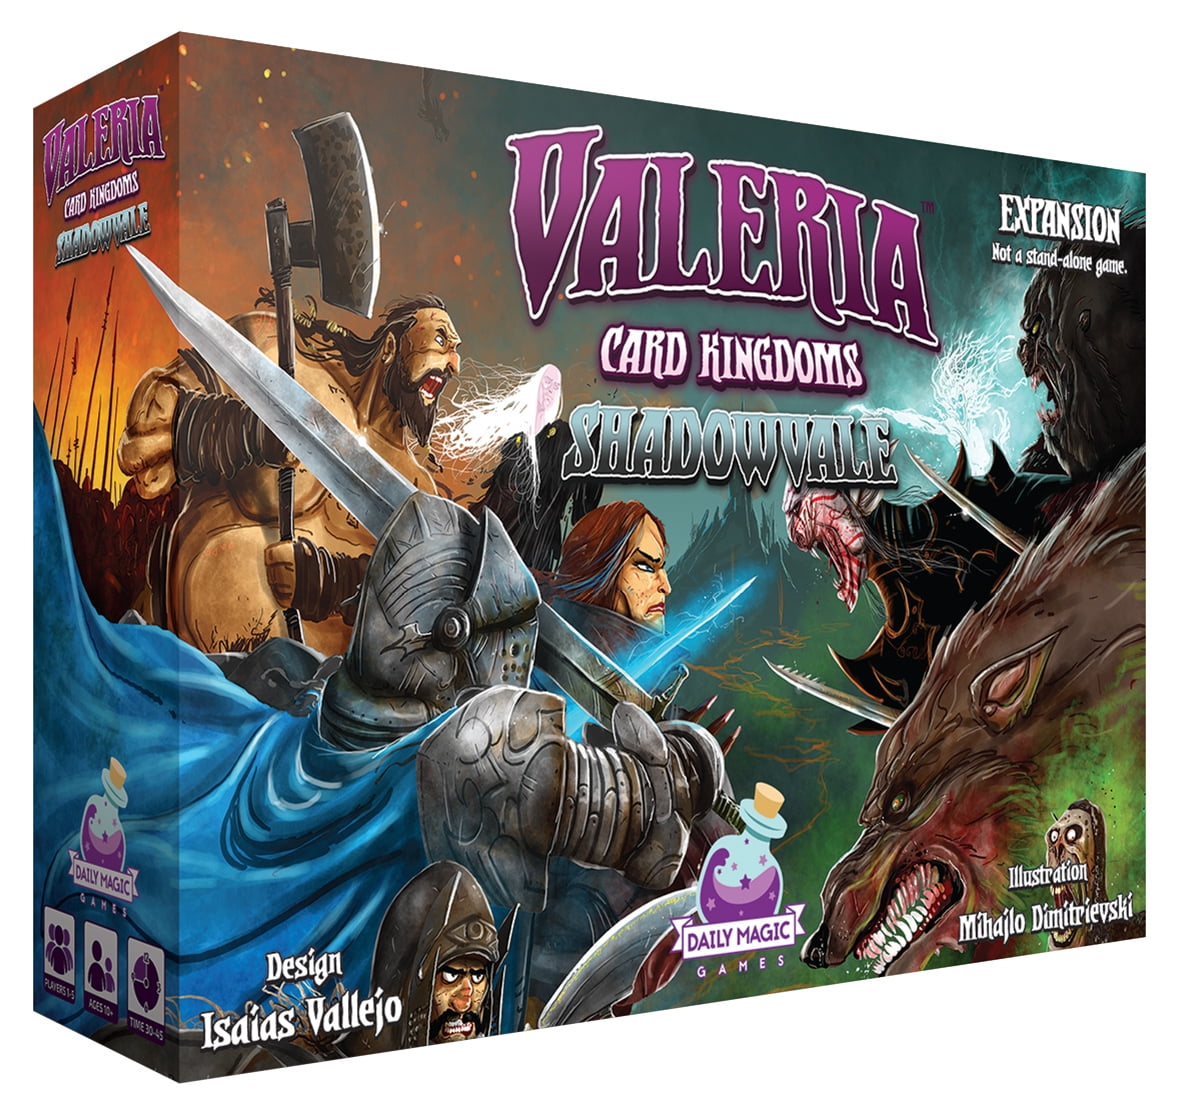  Shadow Kingdoms of Valeria : Toys & Games